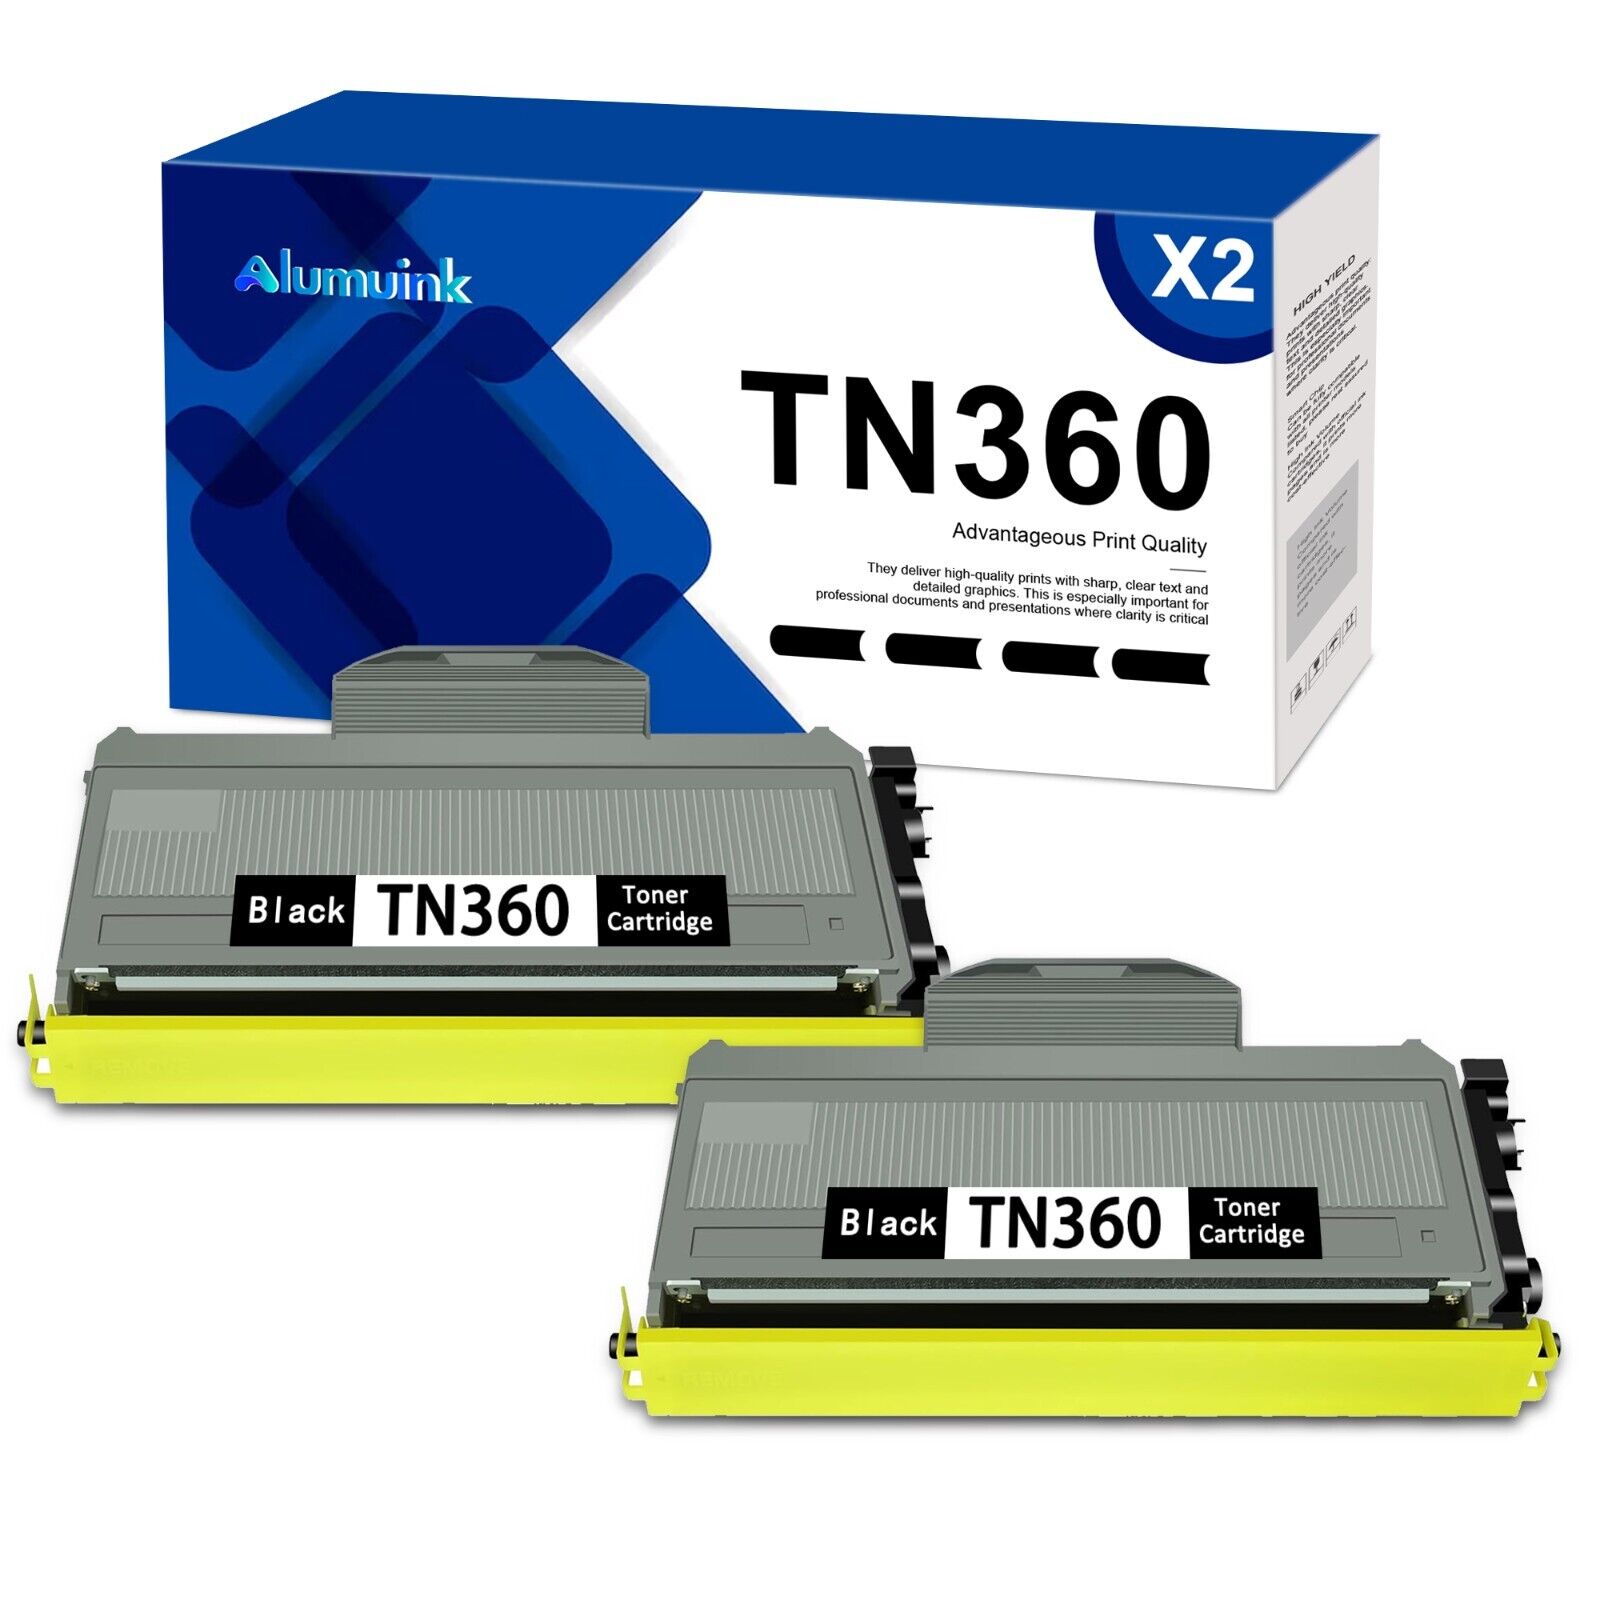 2 PK TN360 Black Toner Cartridge Replacement for Brother TN330 TN360 MFC-7840W